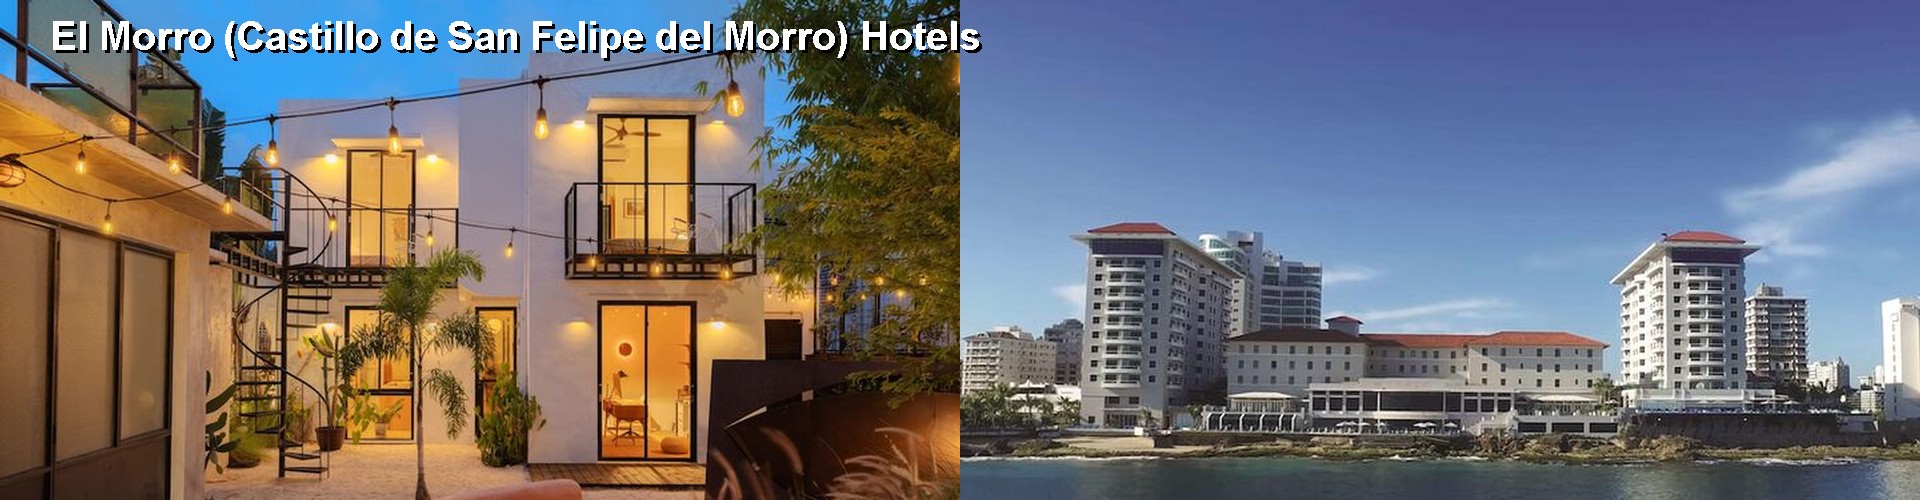 5 Best Hotels near El Morro (Castillo de San Felipe del Morro)